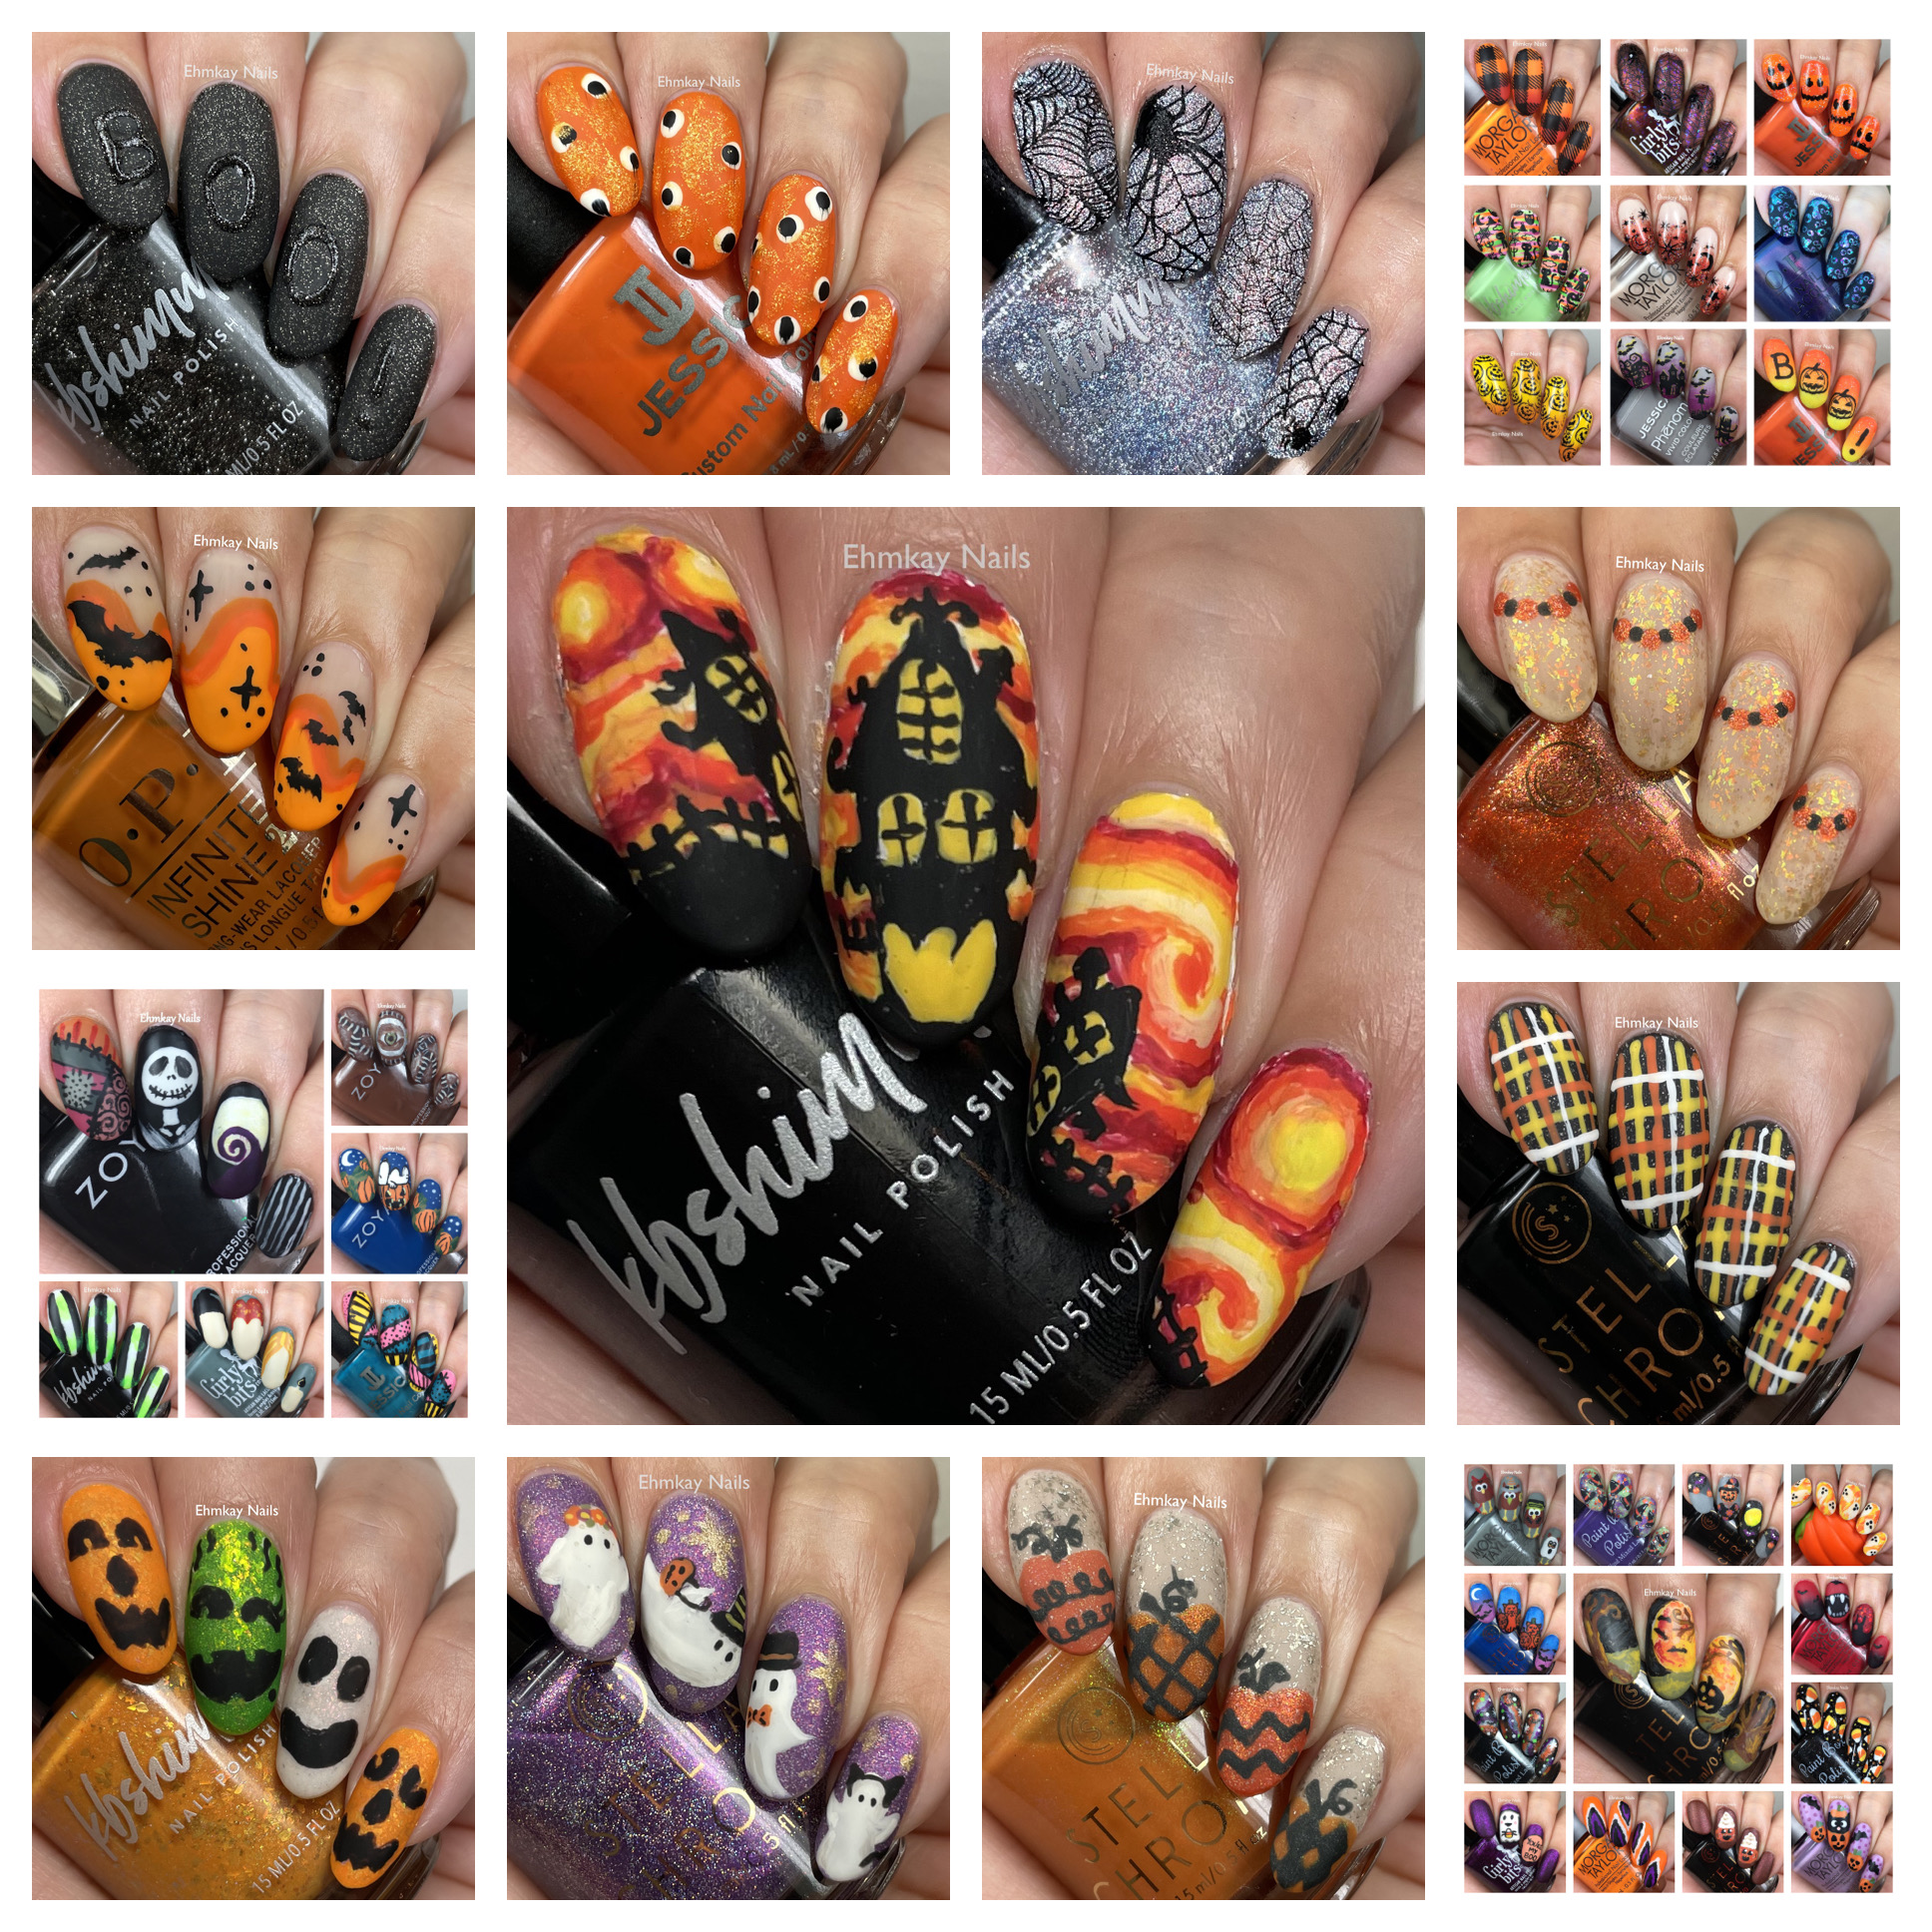 ehmkay nails: 13 Days of Halloween Nail Art: Spooky Eyes over Chameleon  Flakes